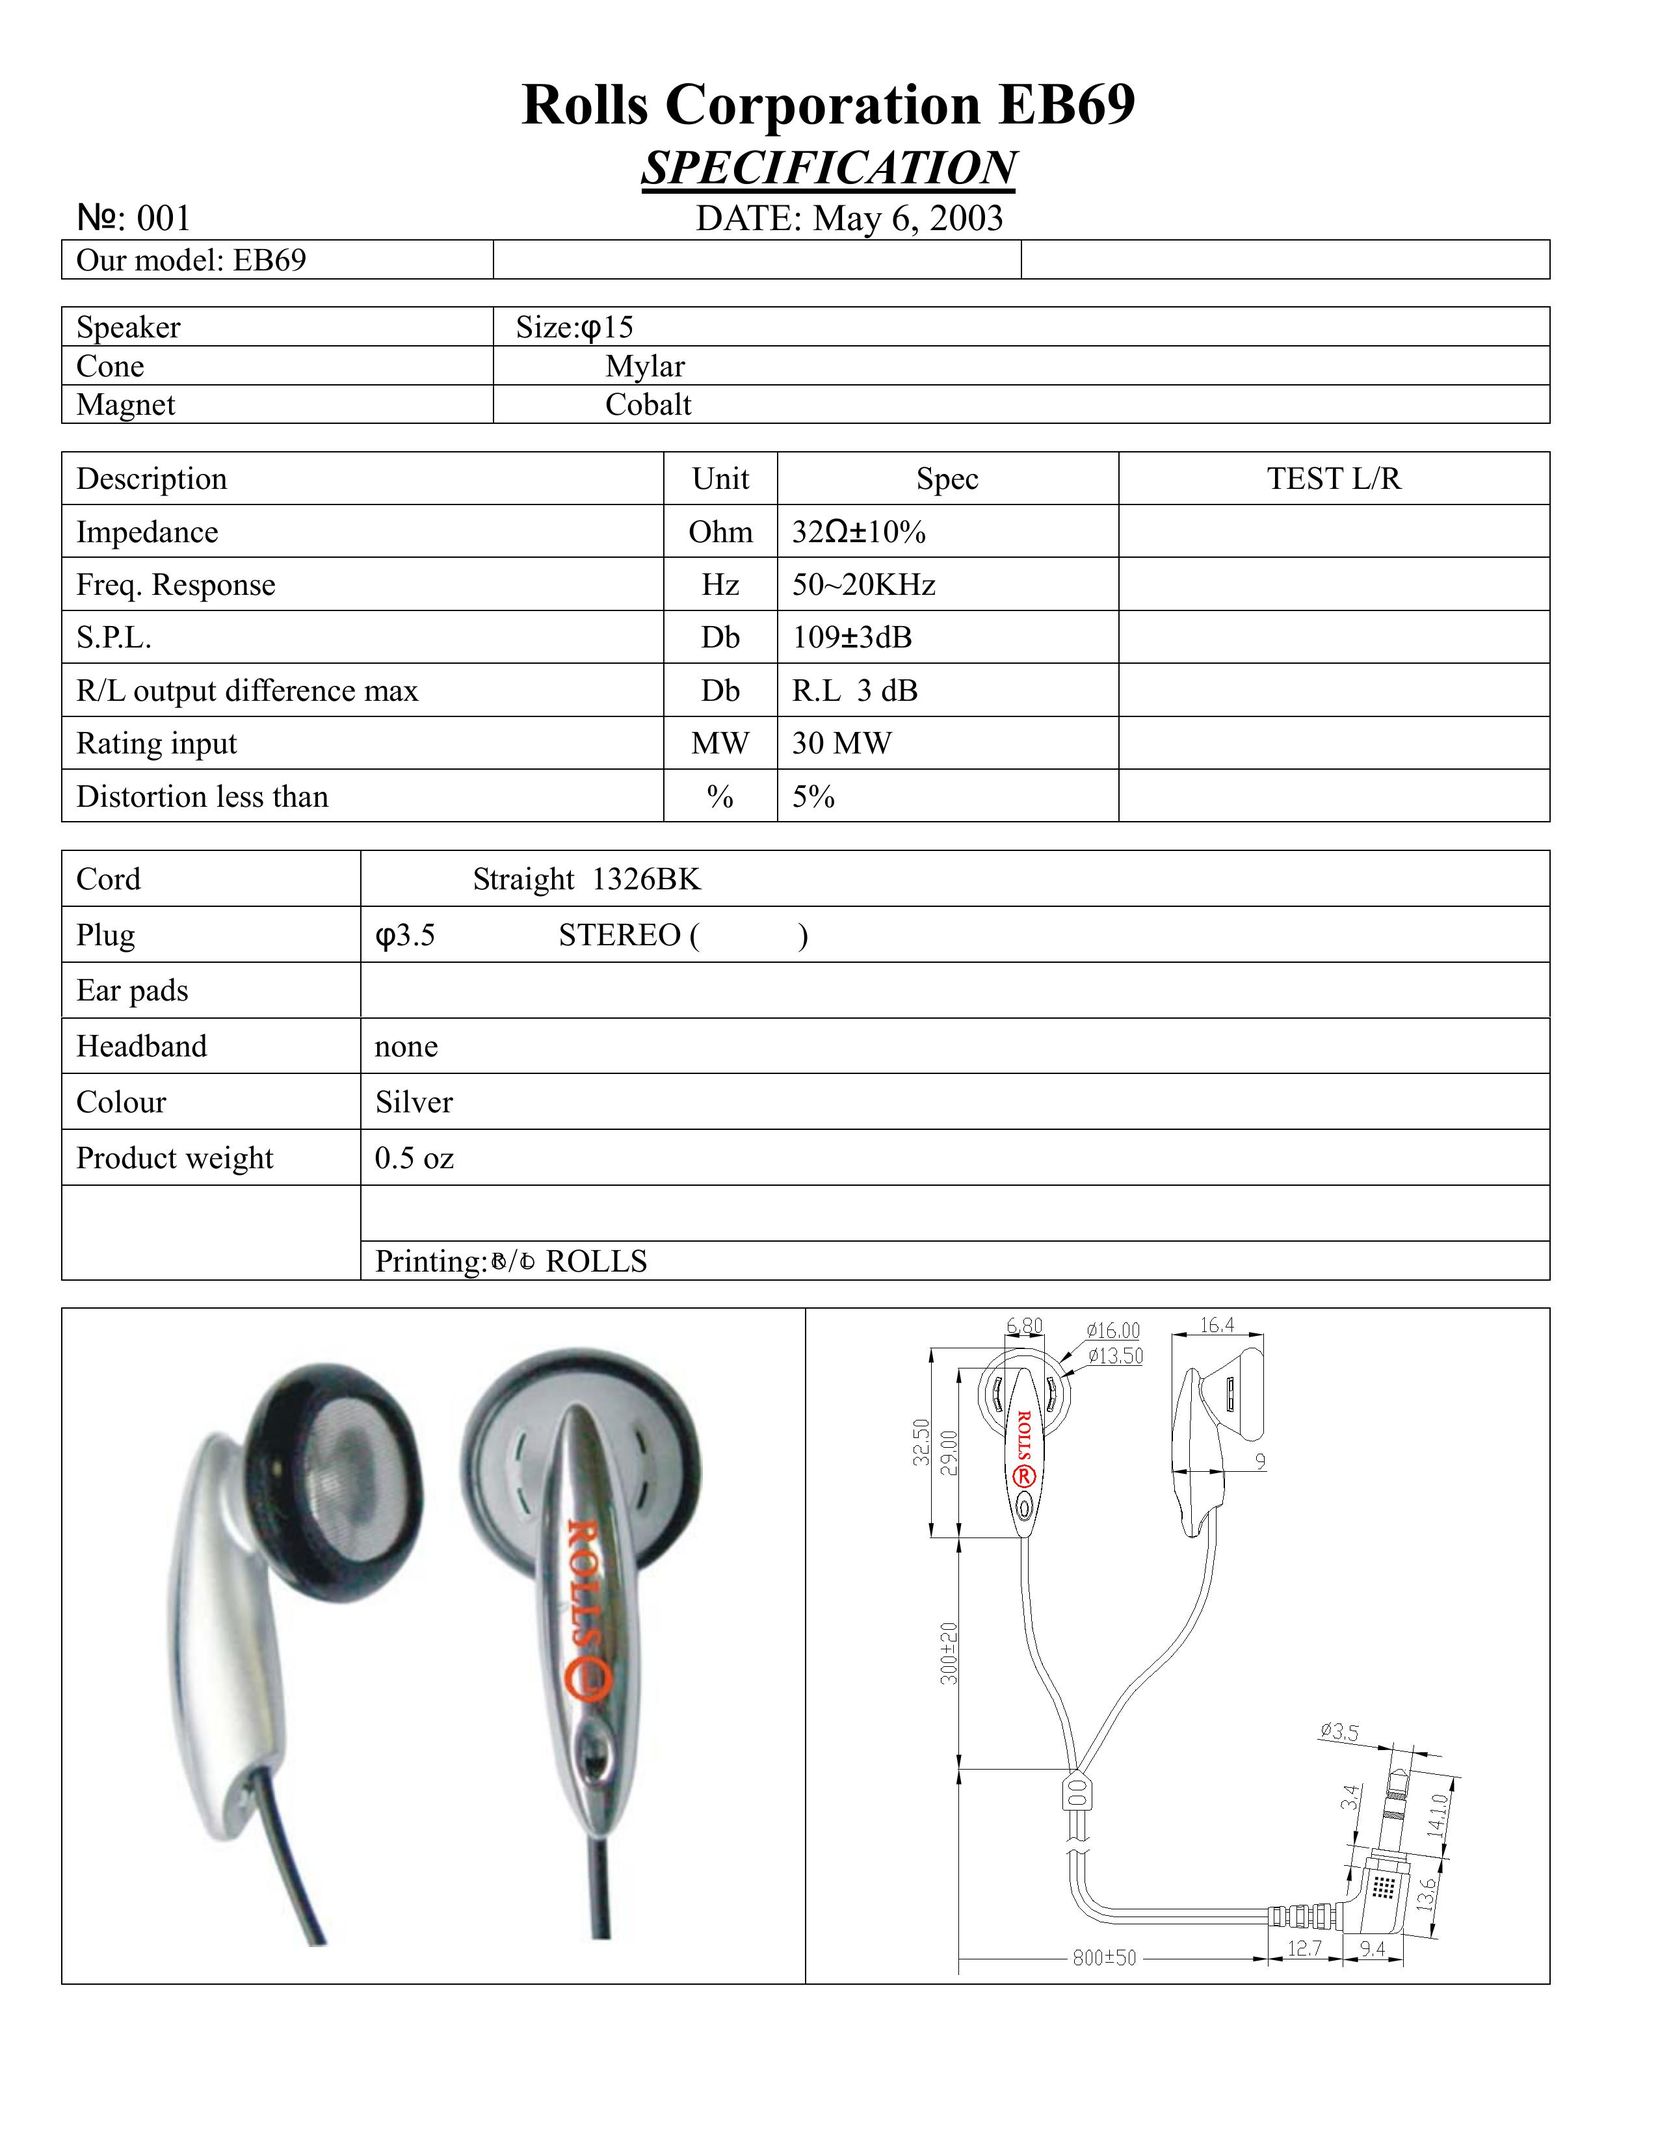 Rolls EB69 Headphones User Manual